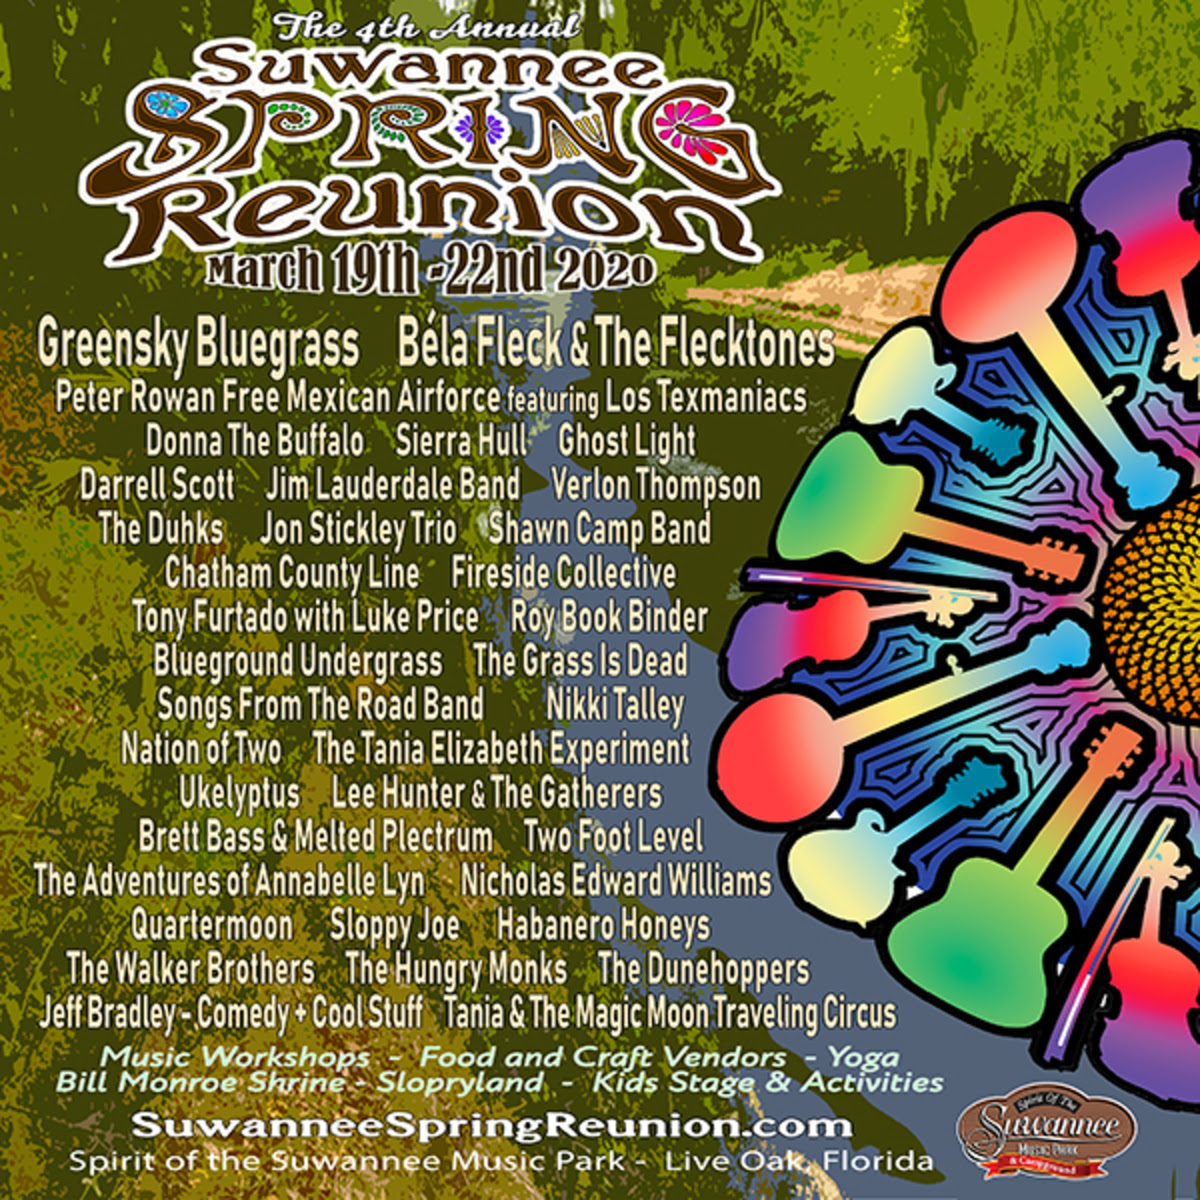 Suwannee Spring Reunion Announces Schedule Greensky Bluegrass, Béla